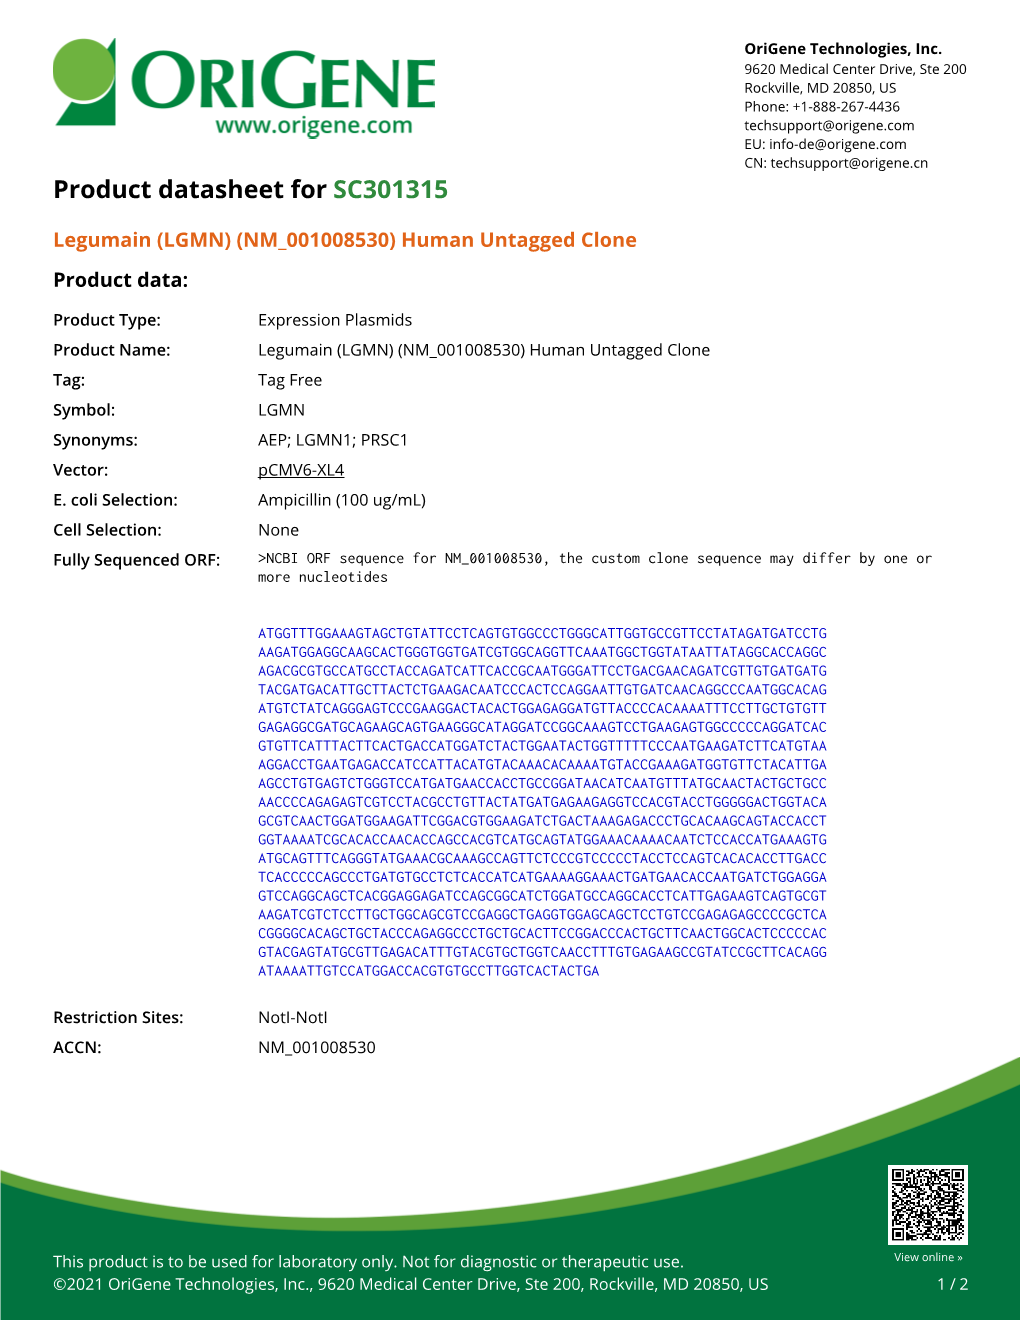 Legumain (LGMN) (NM 001008530) Human Untagged Clone Product Data